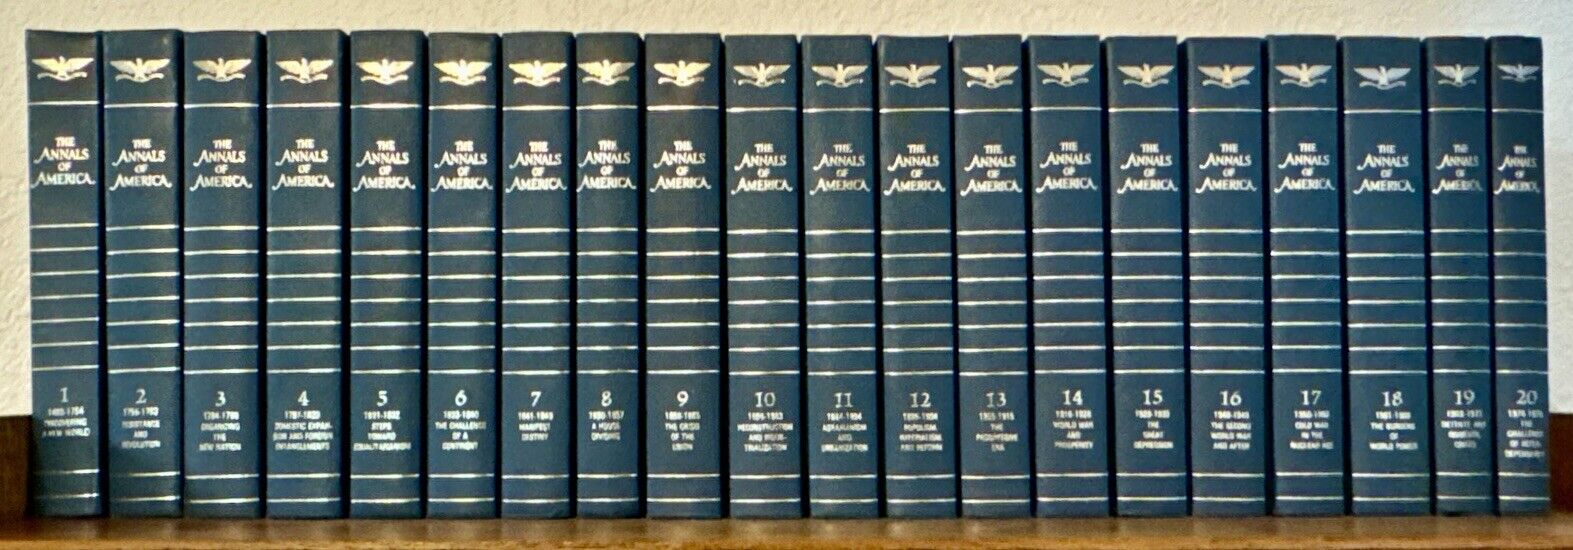 THE ANNALS OF AMERICA 1976 Encyclopedia Britannica 20 VOLUME COMPLETE SET